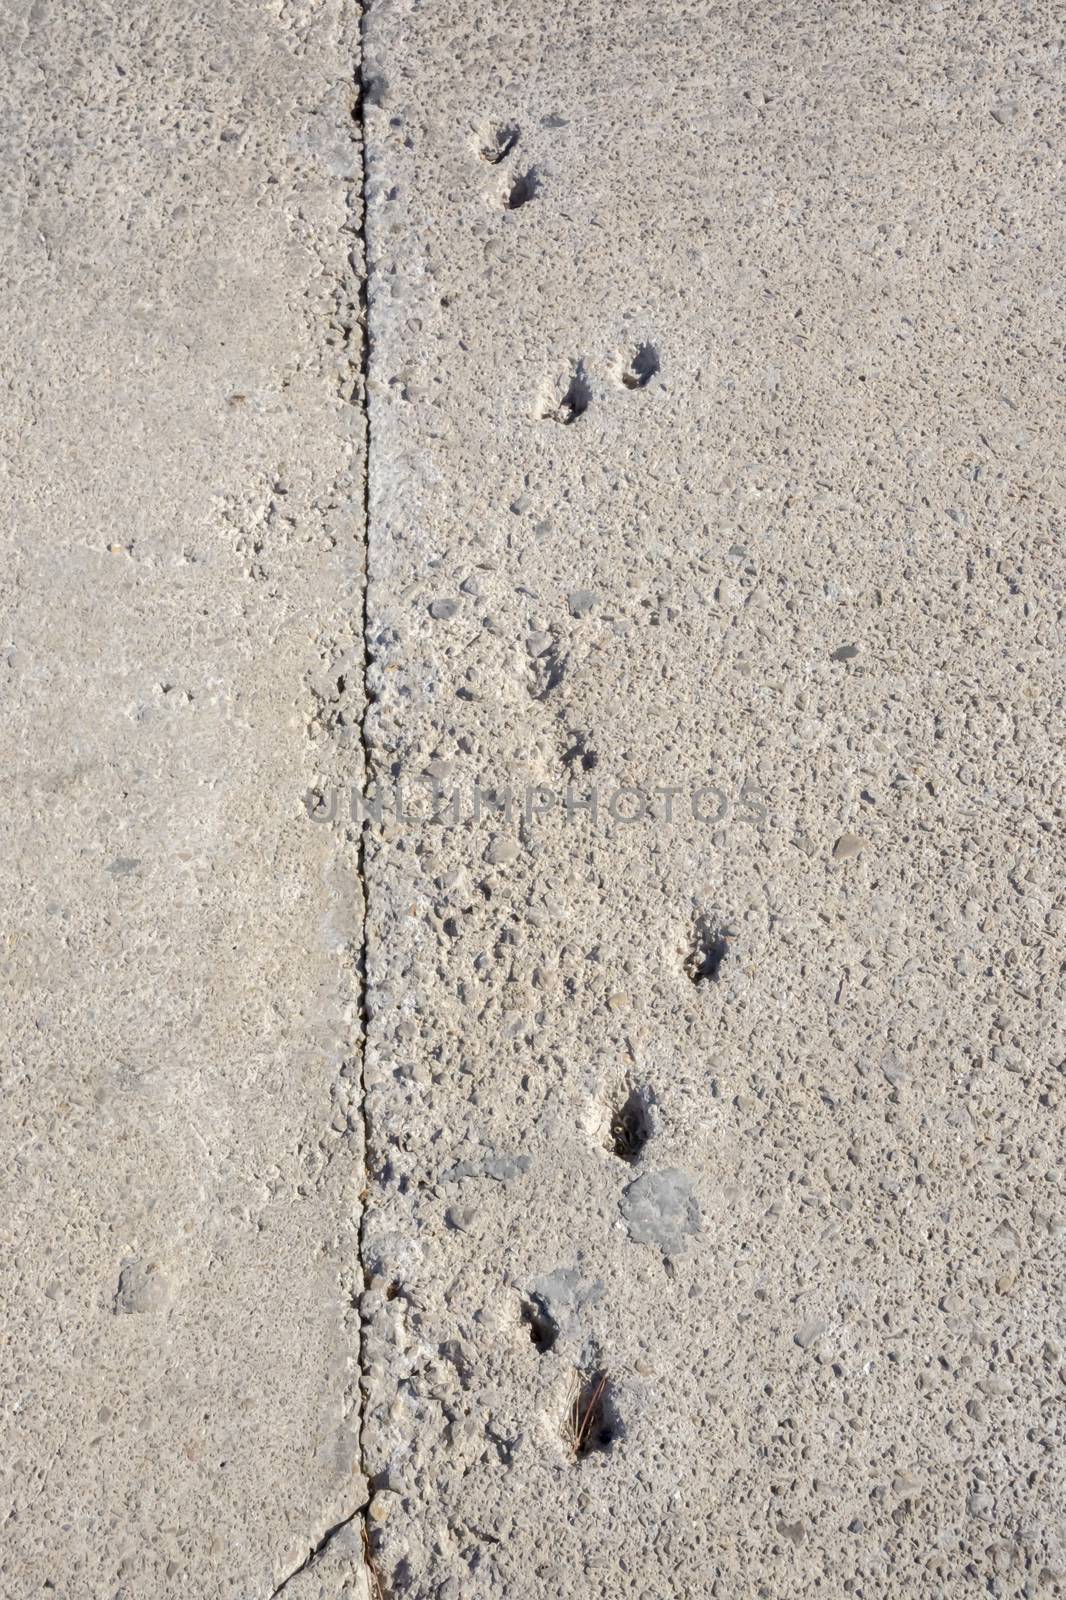 Concrete footprints  by ArtesiaWells